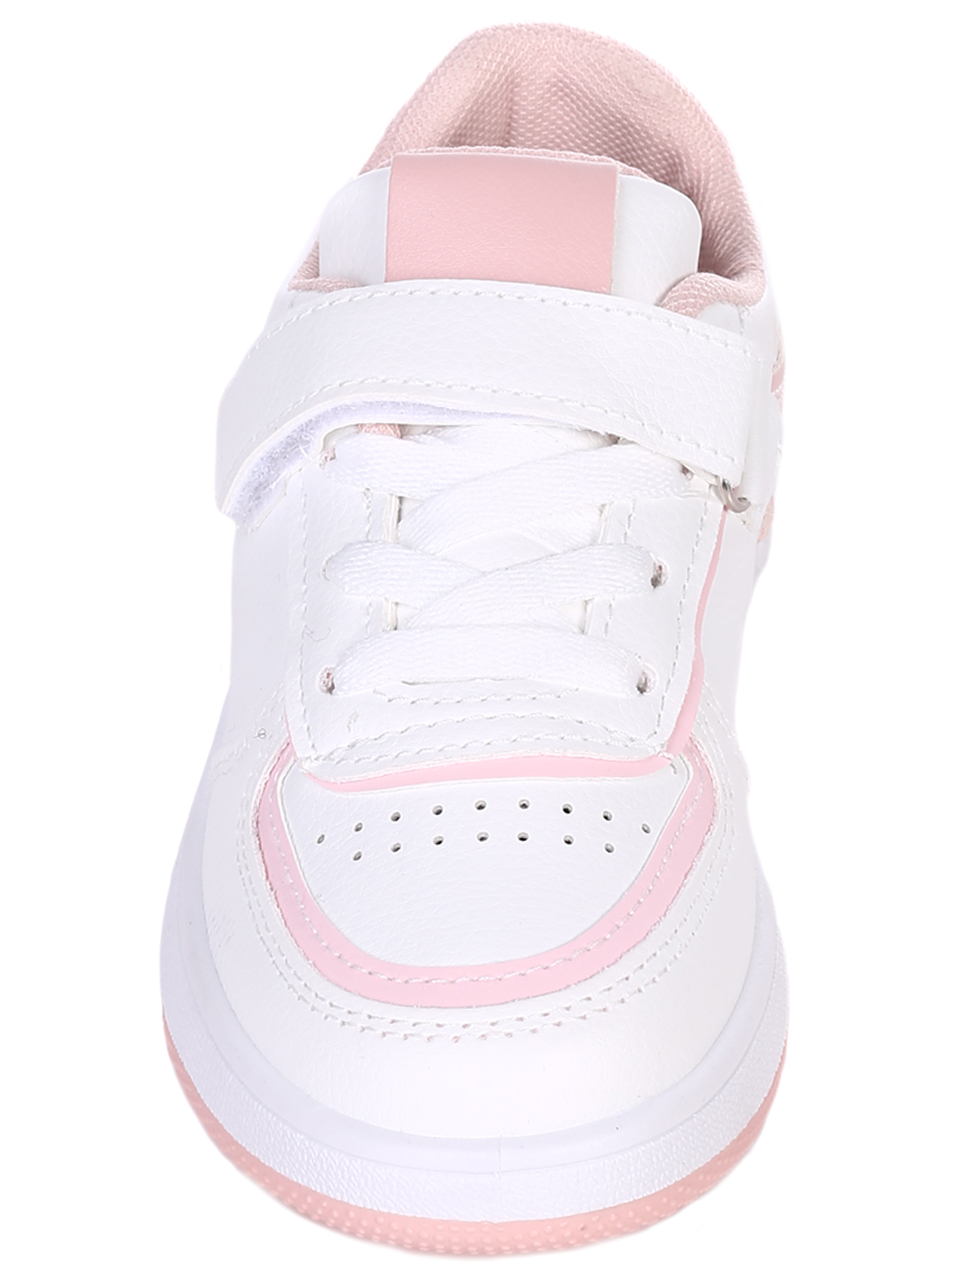 Ежедневни детски обувки в бяло и розово 18U-22001 white/pink